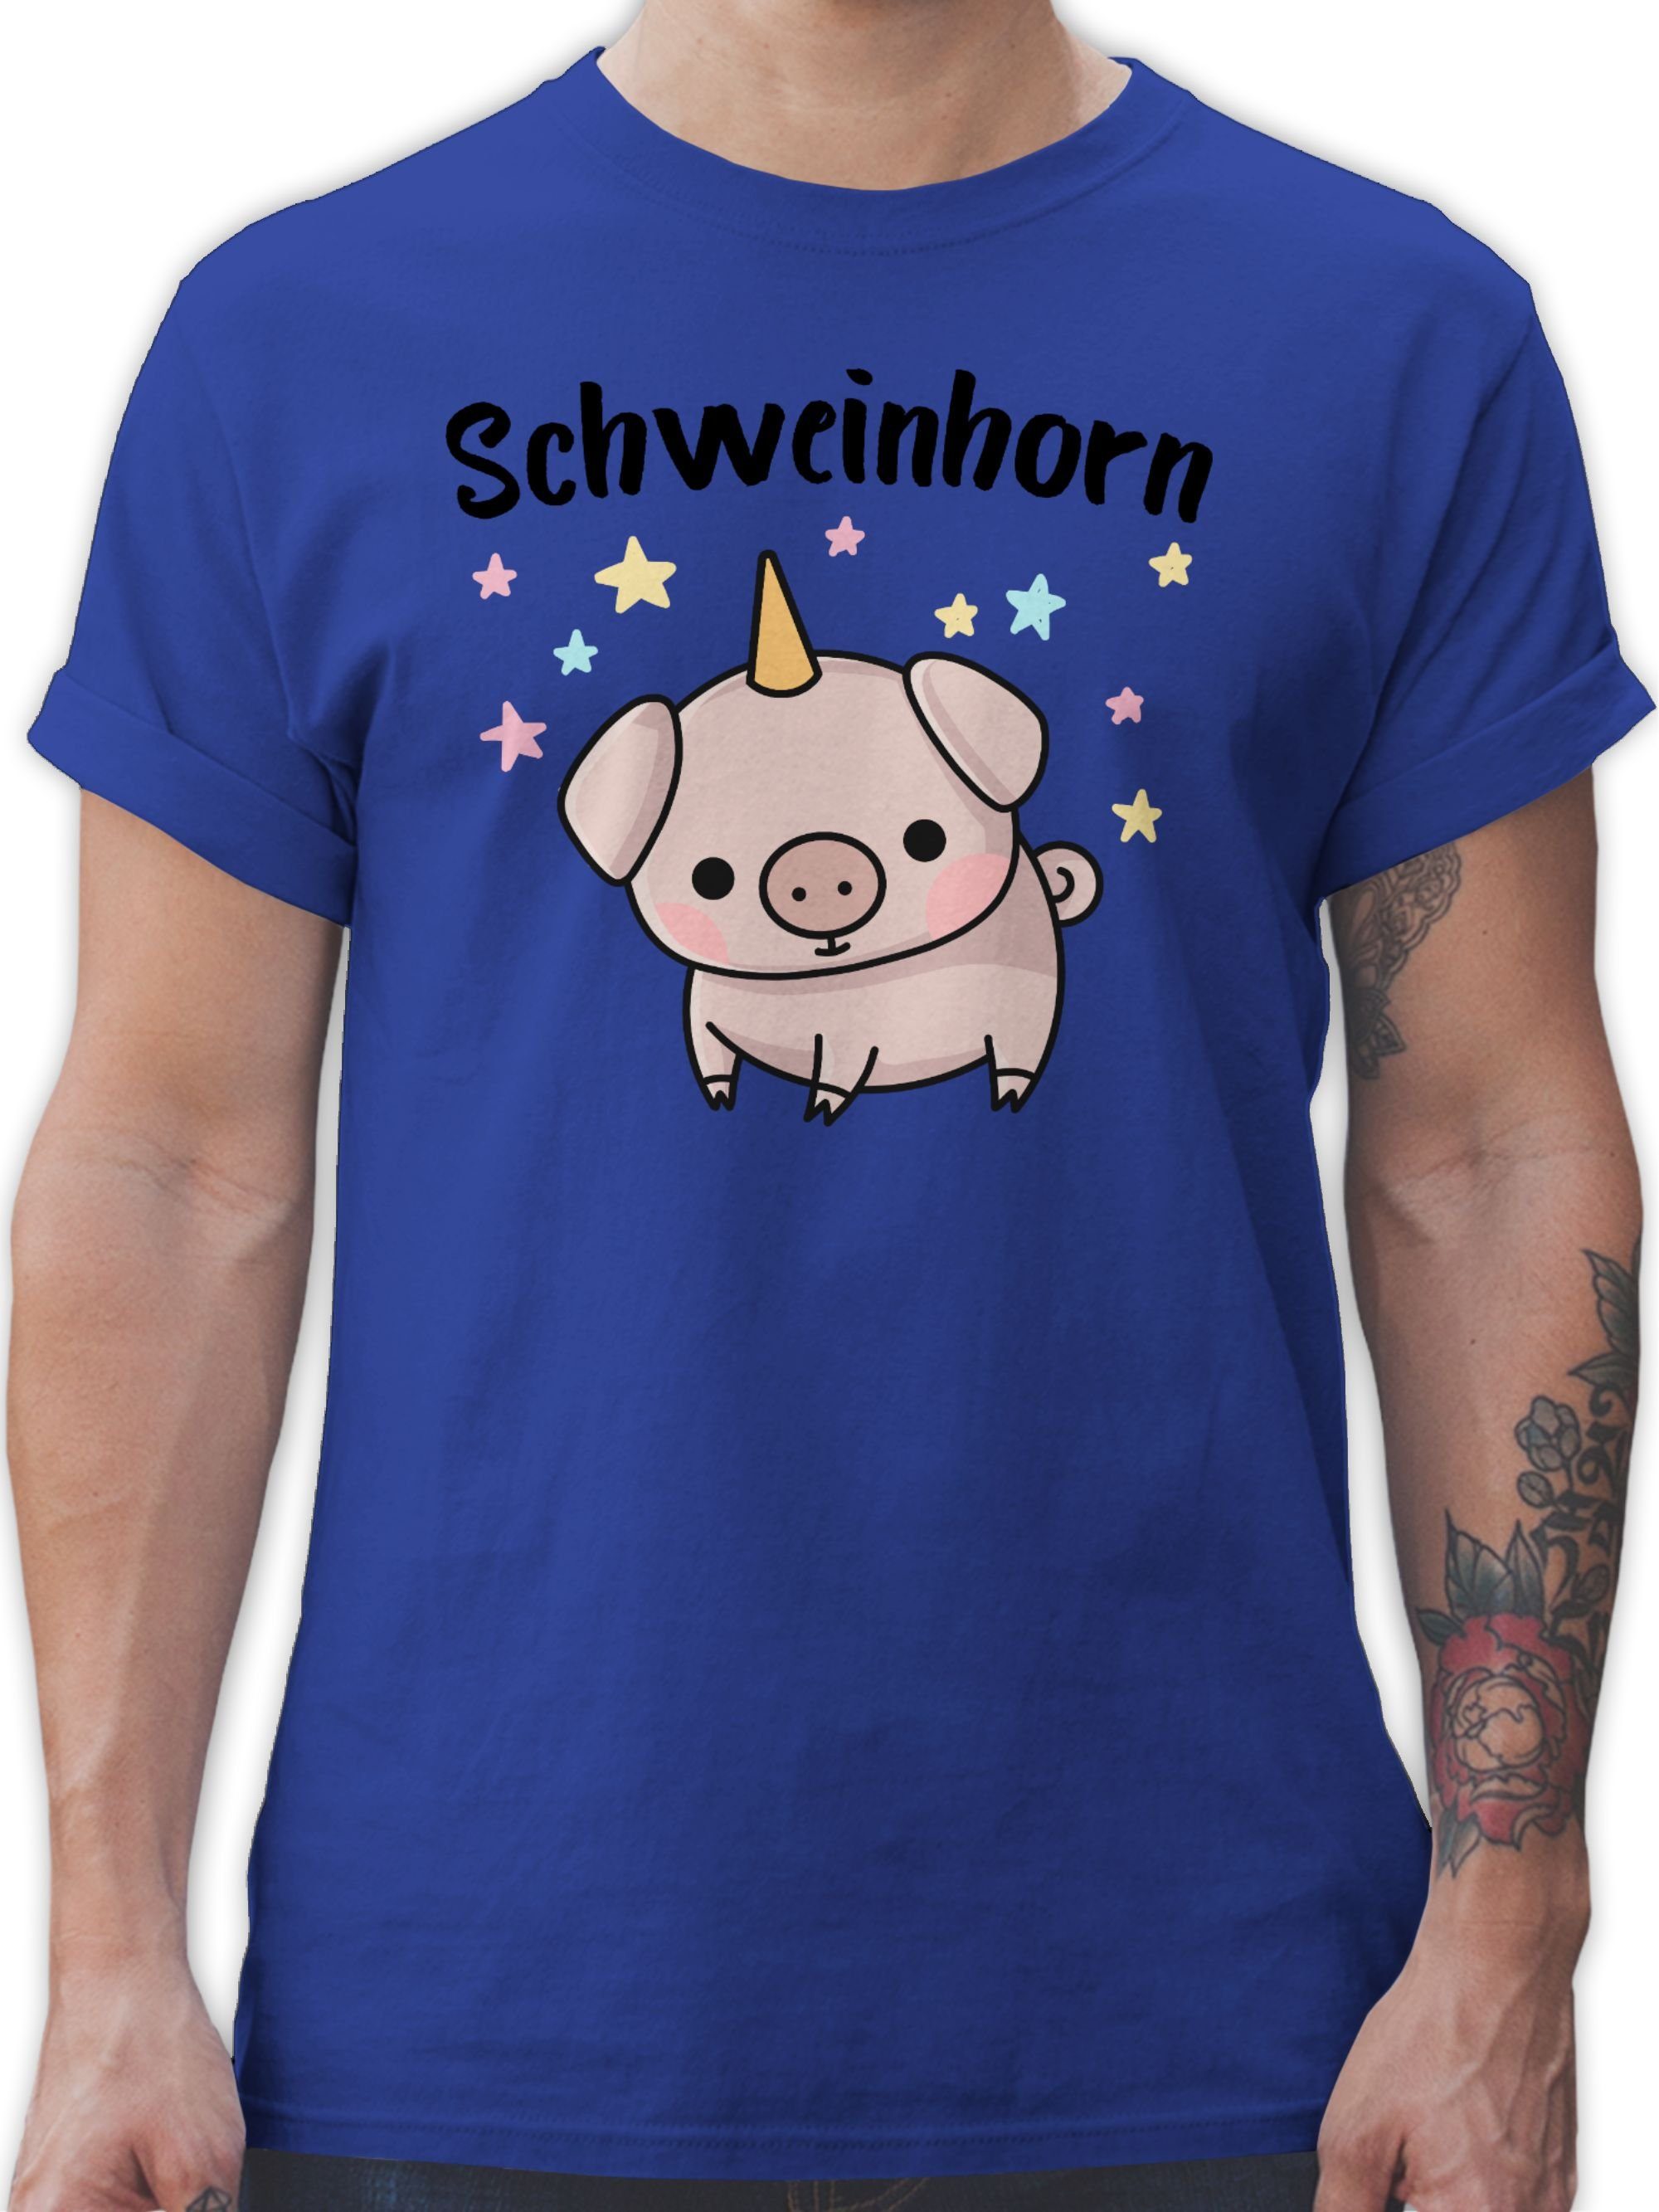 Shirtracer T-Shirt Schweinhorn Karneval Outfit 3 Royalblau